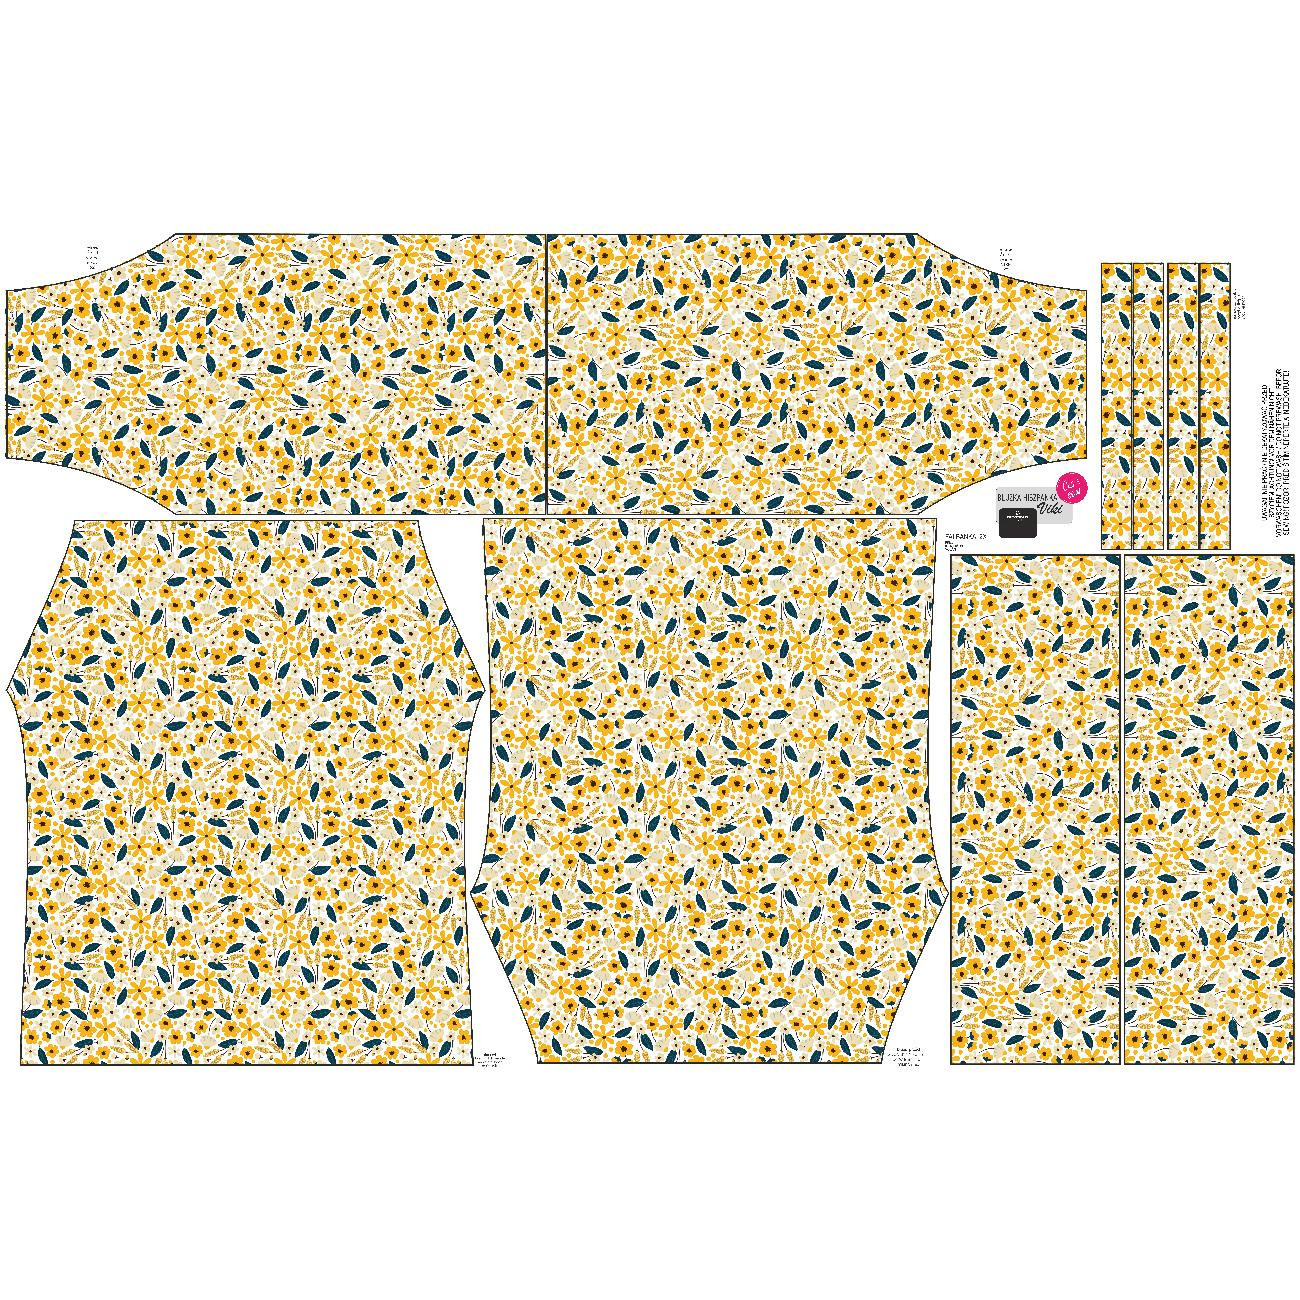 Bardot neckline blouse (VIKI) - SMALL FLOWERS pat. 2 / white - sewing set